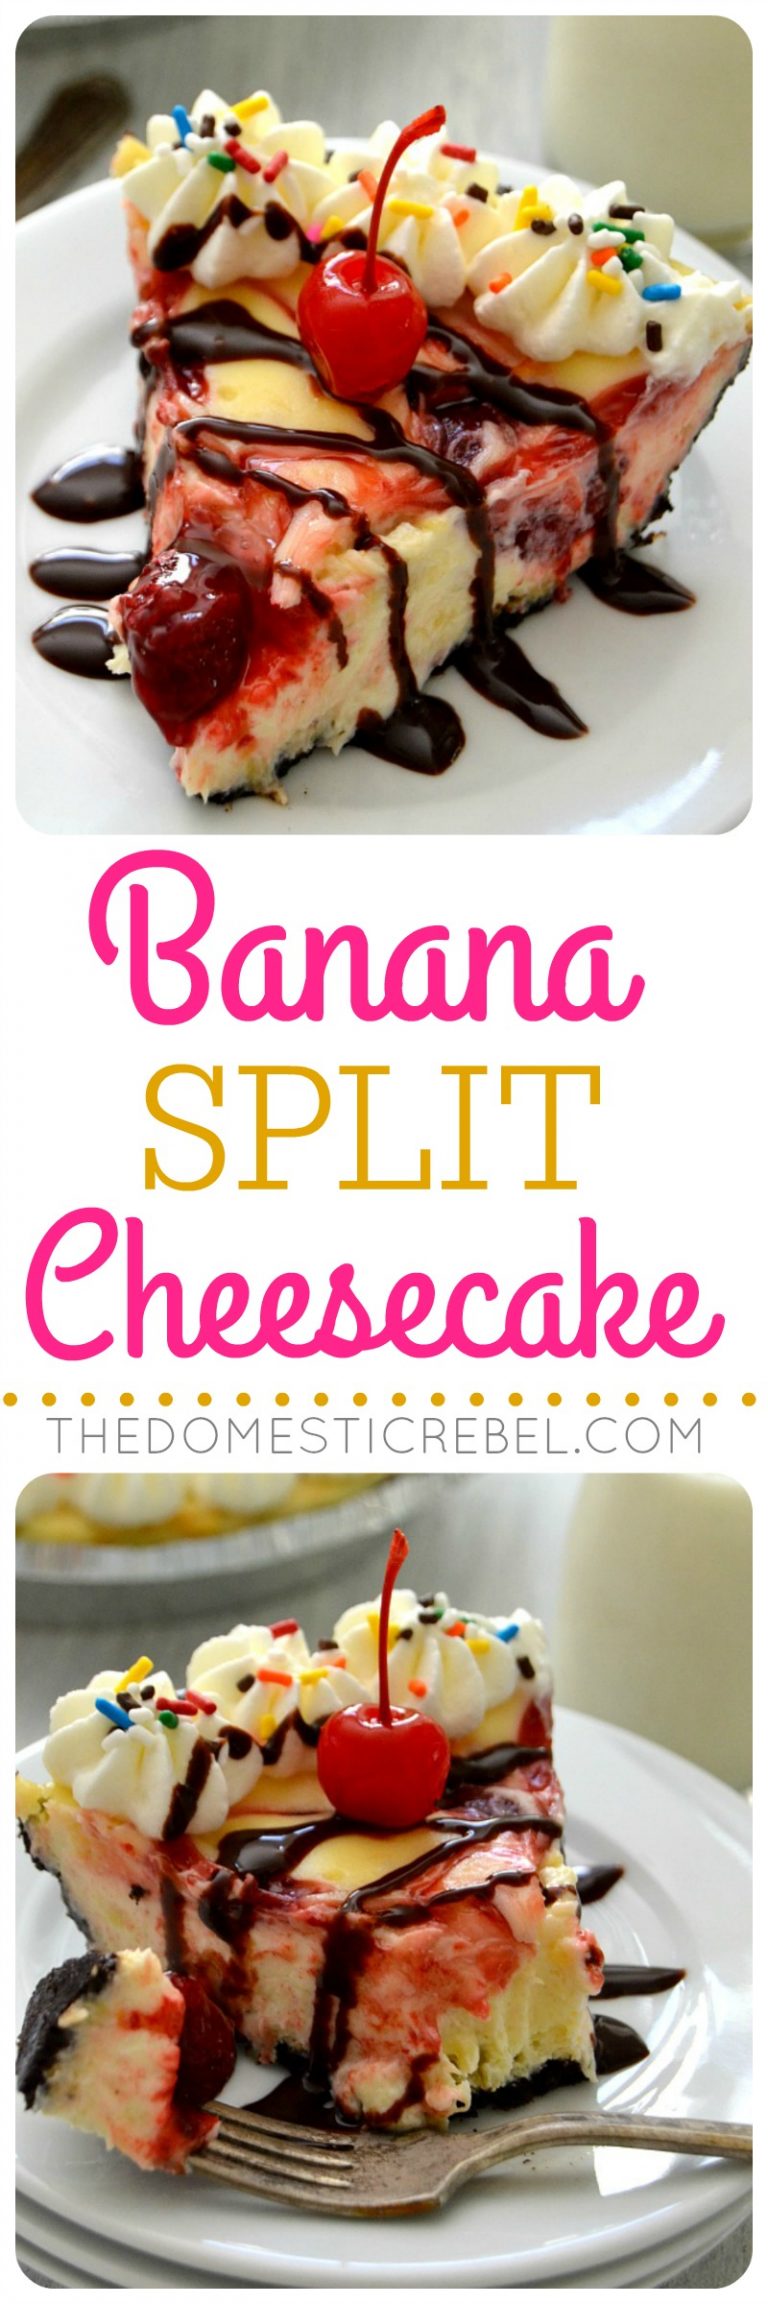 Banana Split Cheesecake | The Domestic Rebel